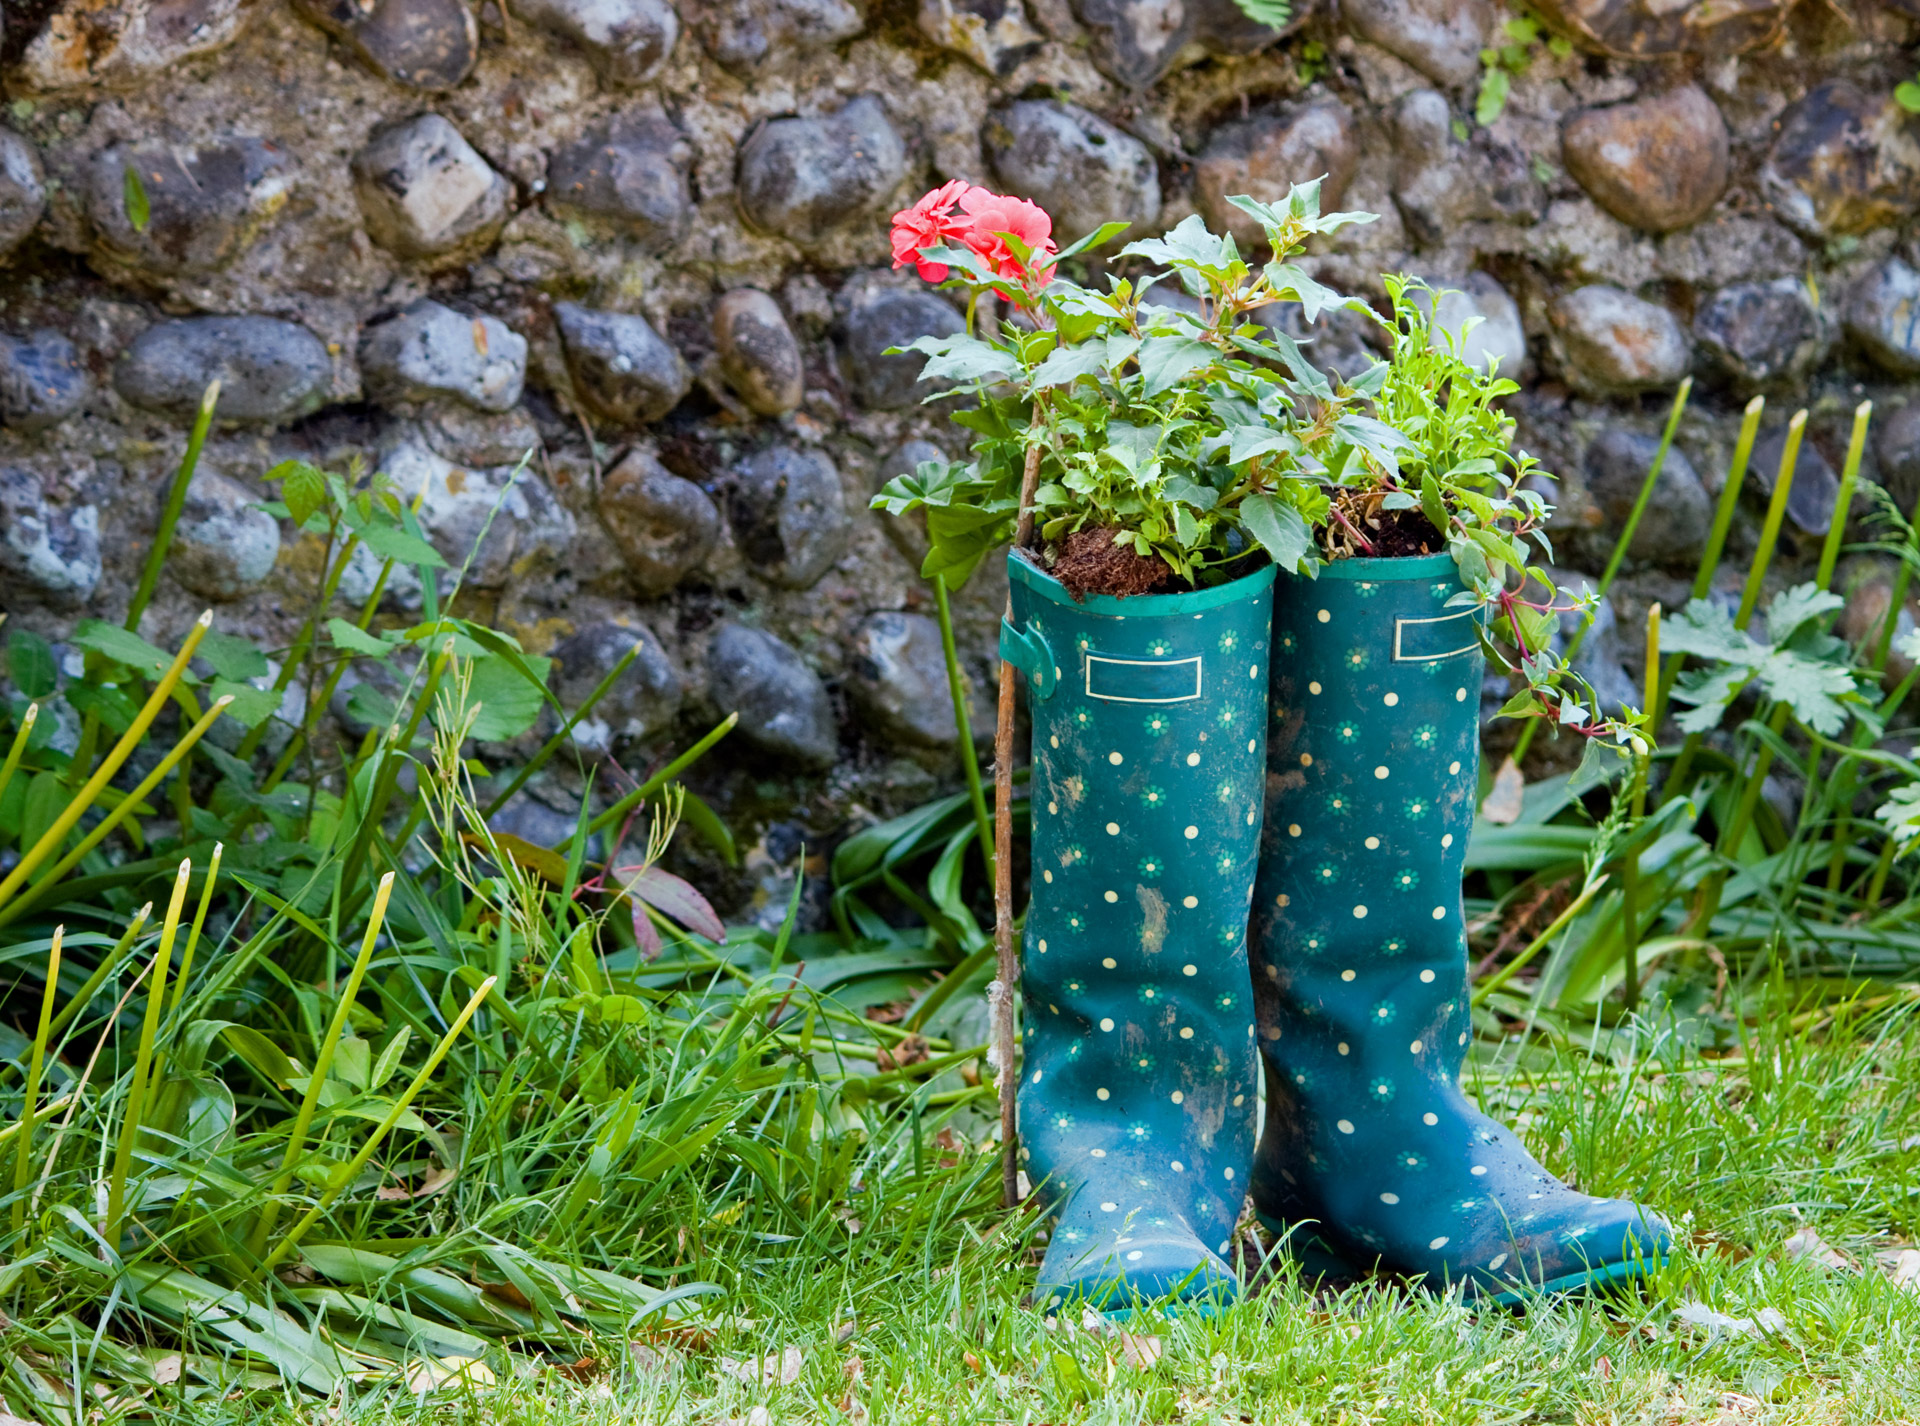 Wellington Boots & Flowers